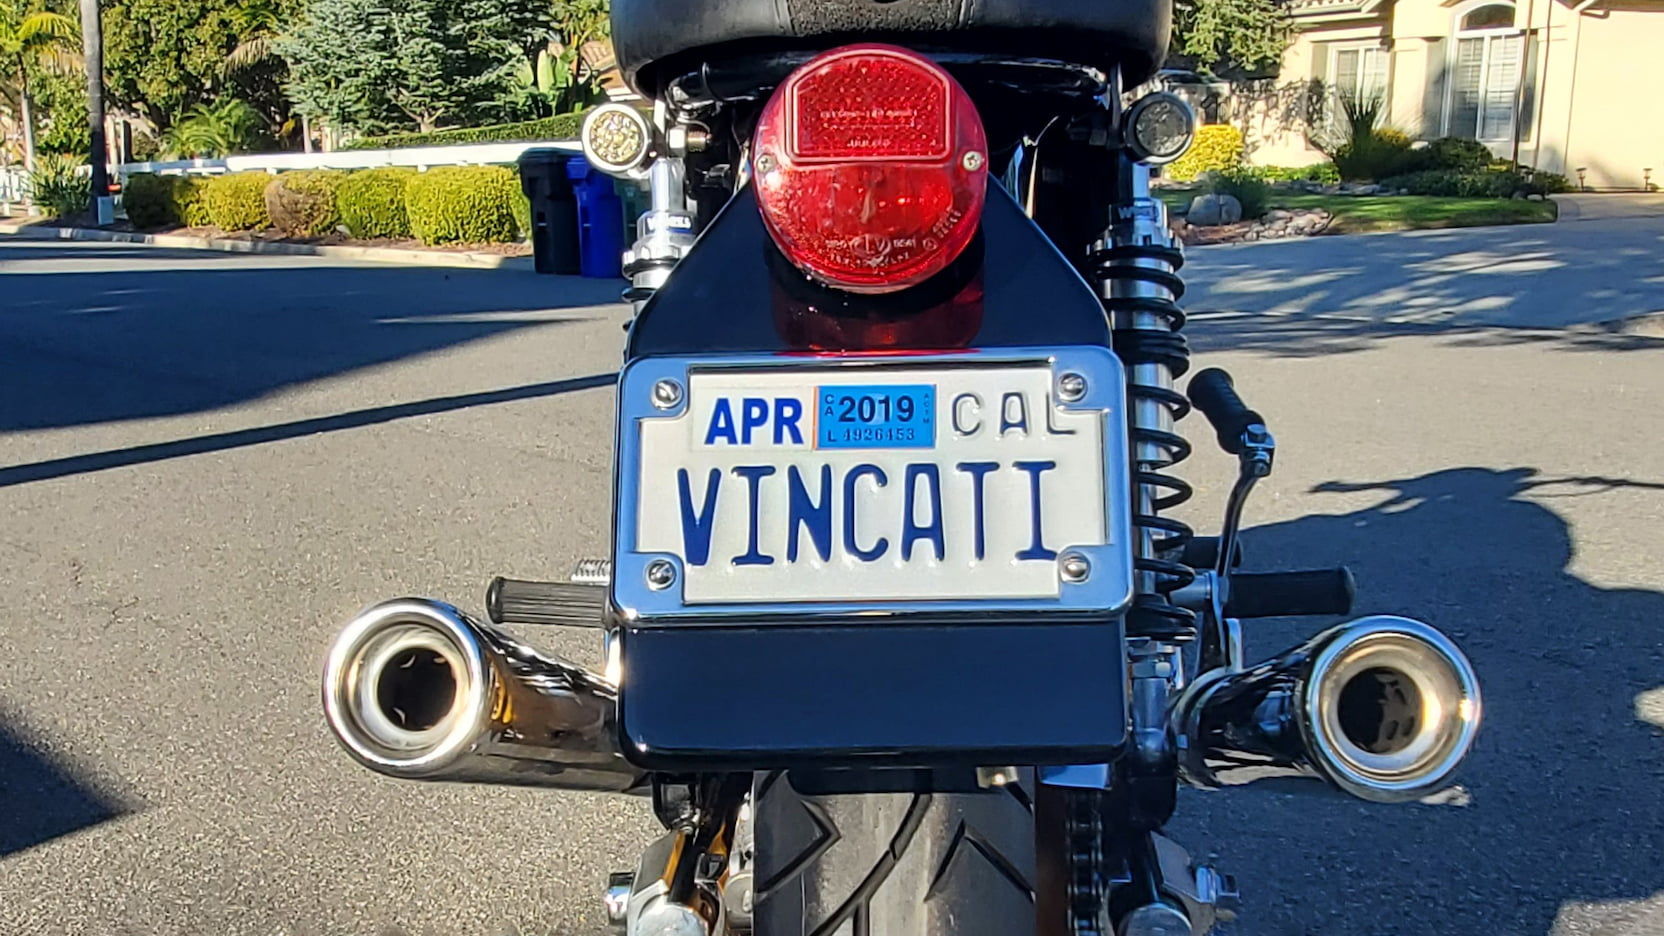 Vincent Ducati Vincati